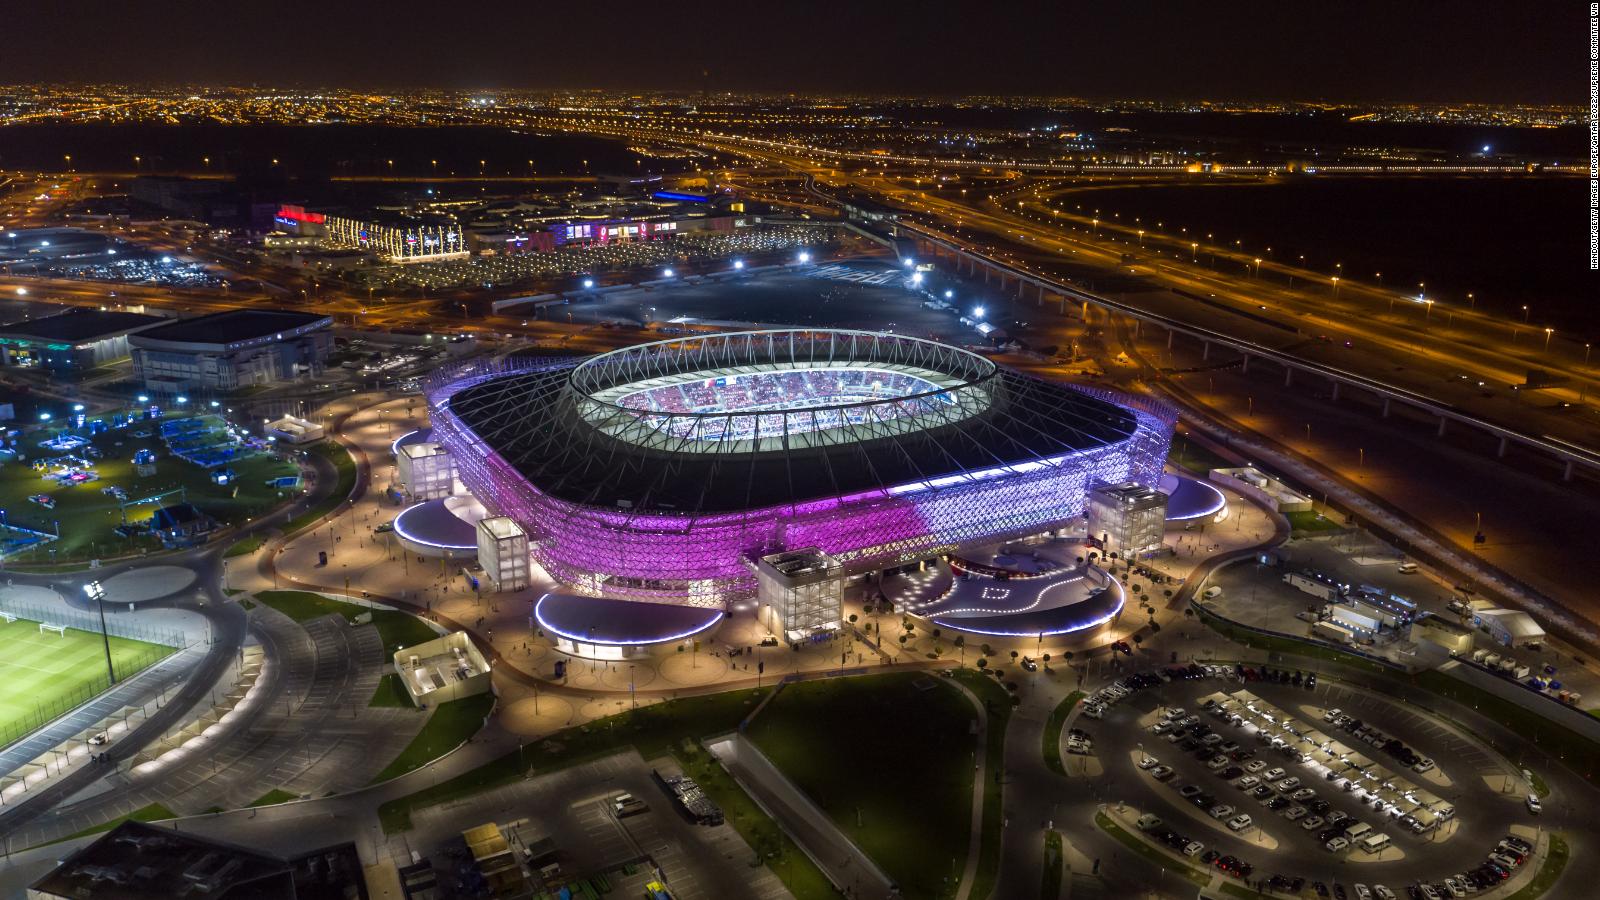 Qatar 2022 World Cup tickets go on sale with Final tickets reaching $1,600 - CNN